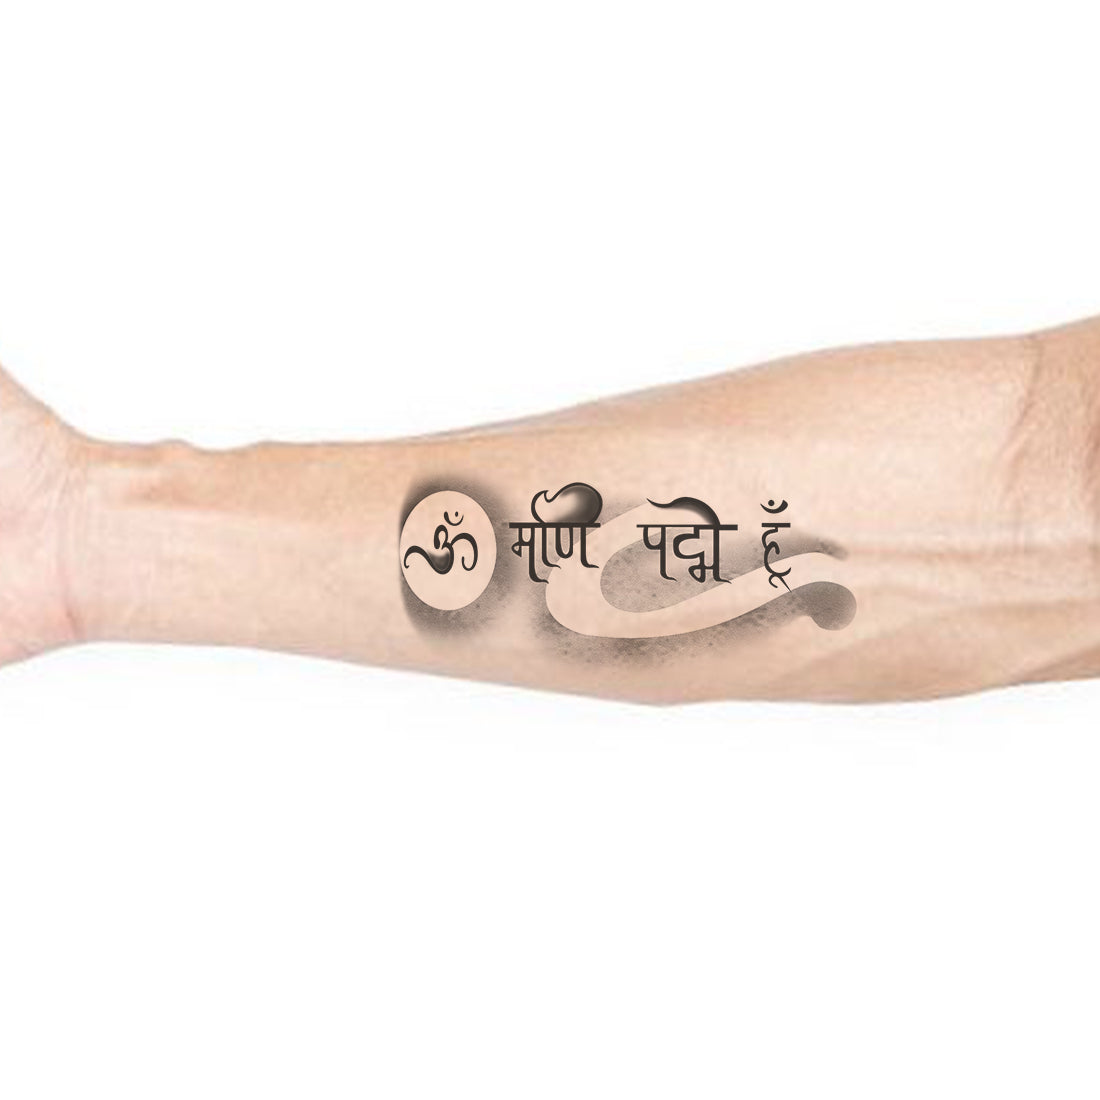 MAHADEV  jai mahakal सच शनतएकत Har Har mahadev   Jai mahakal follow me rudrakaansh   Shiva tattoo design Shiva tattoo  Lord shiva pics